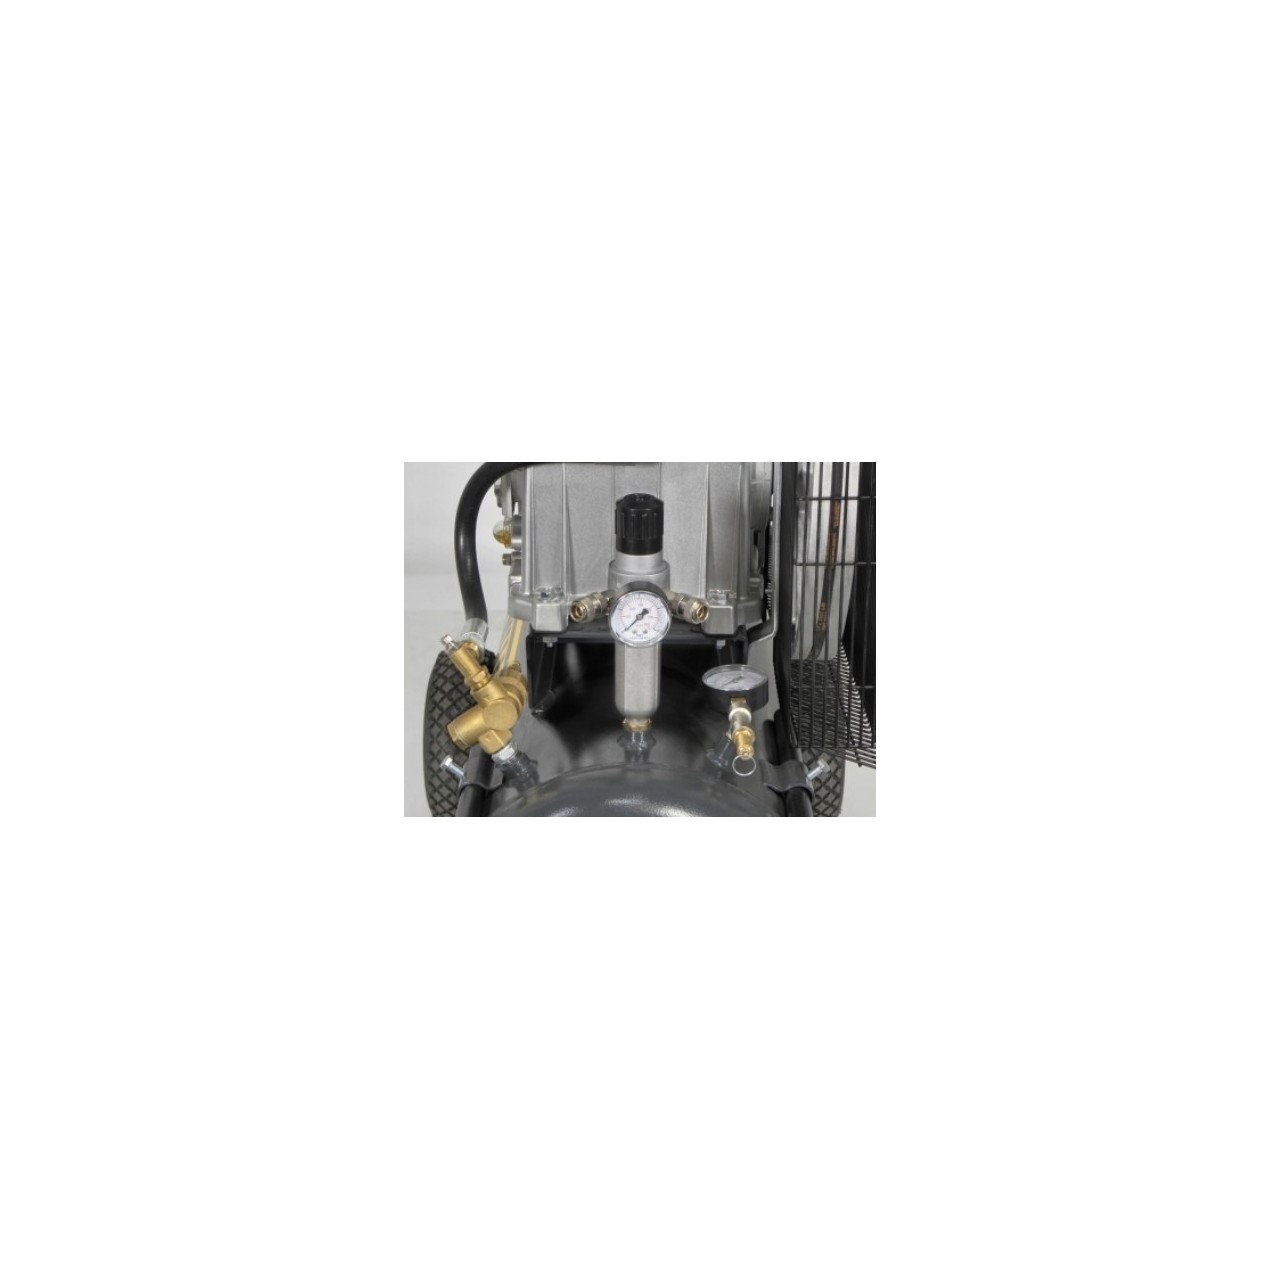 Compresor de pistón Nuair B3800 gasolina 5,5cv 10+10L